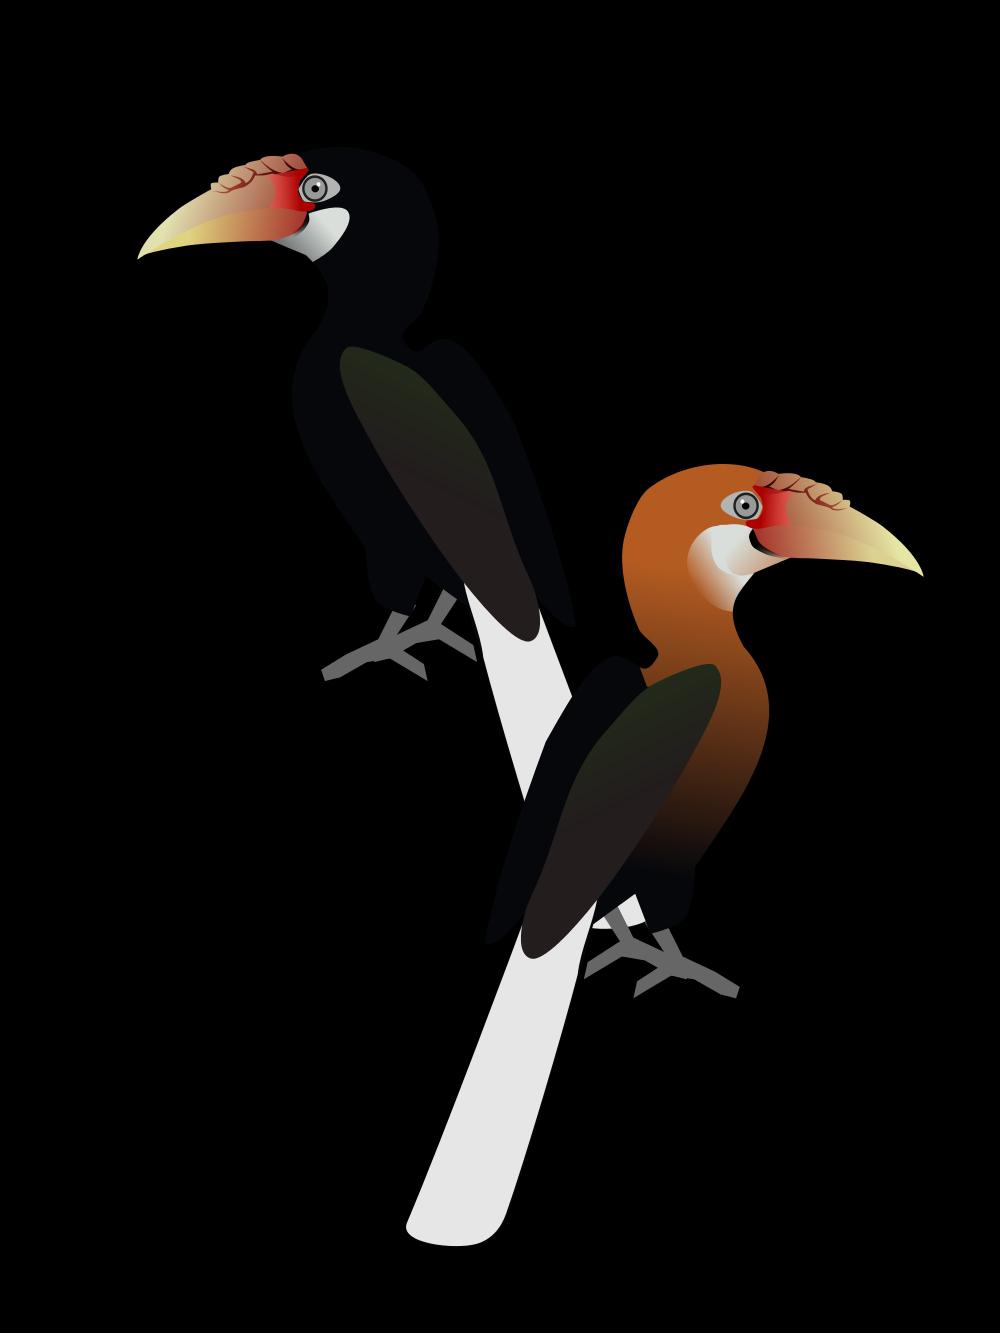 拿岛皱盔犀鸟 / Narcondam Hornbill / Rhyticeros narcondami